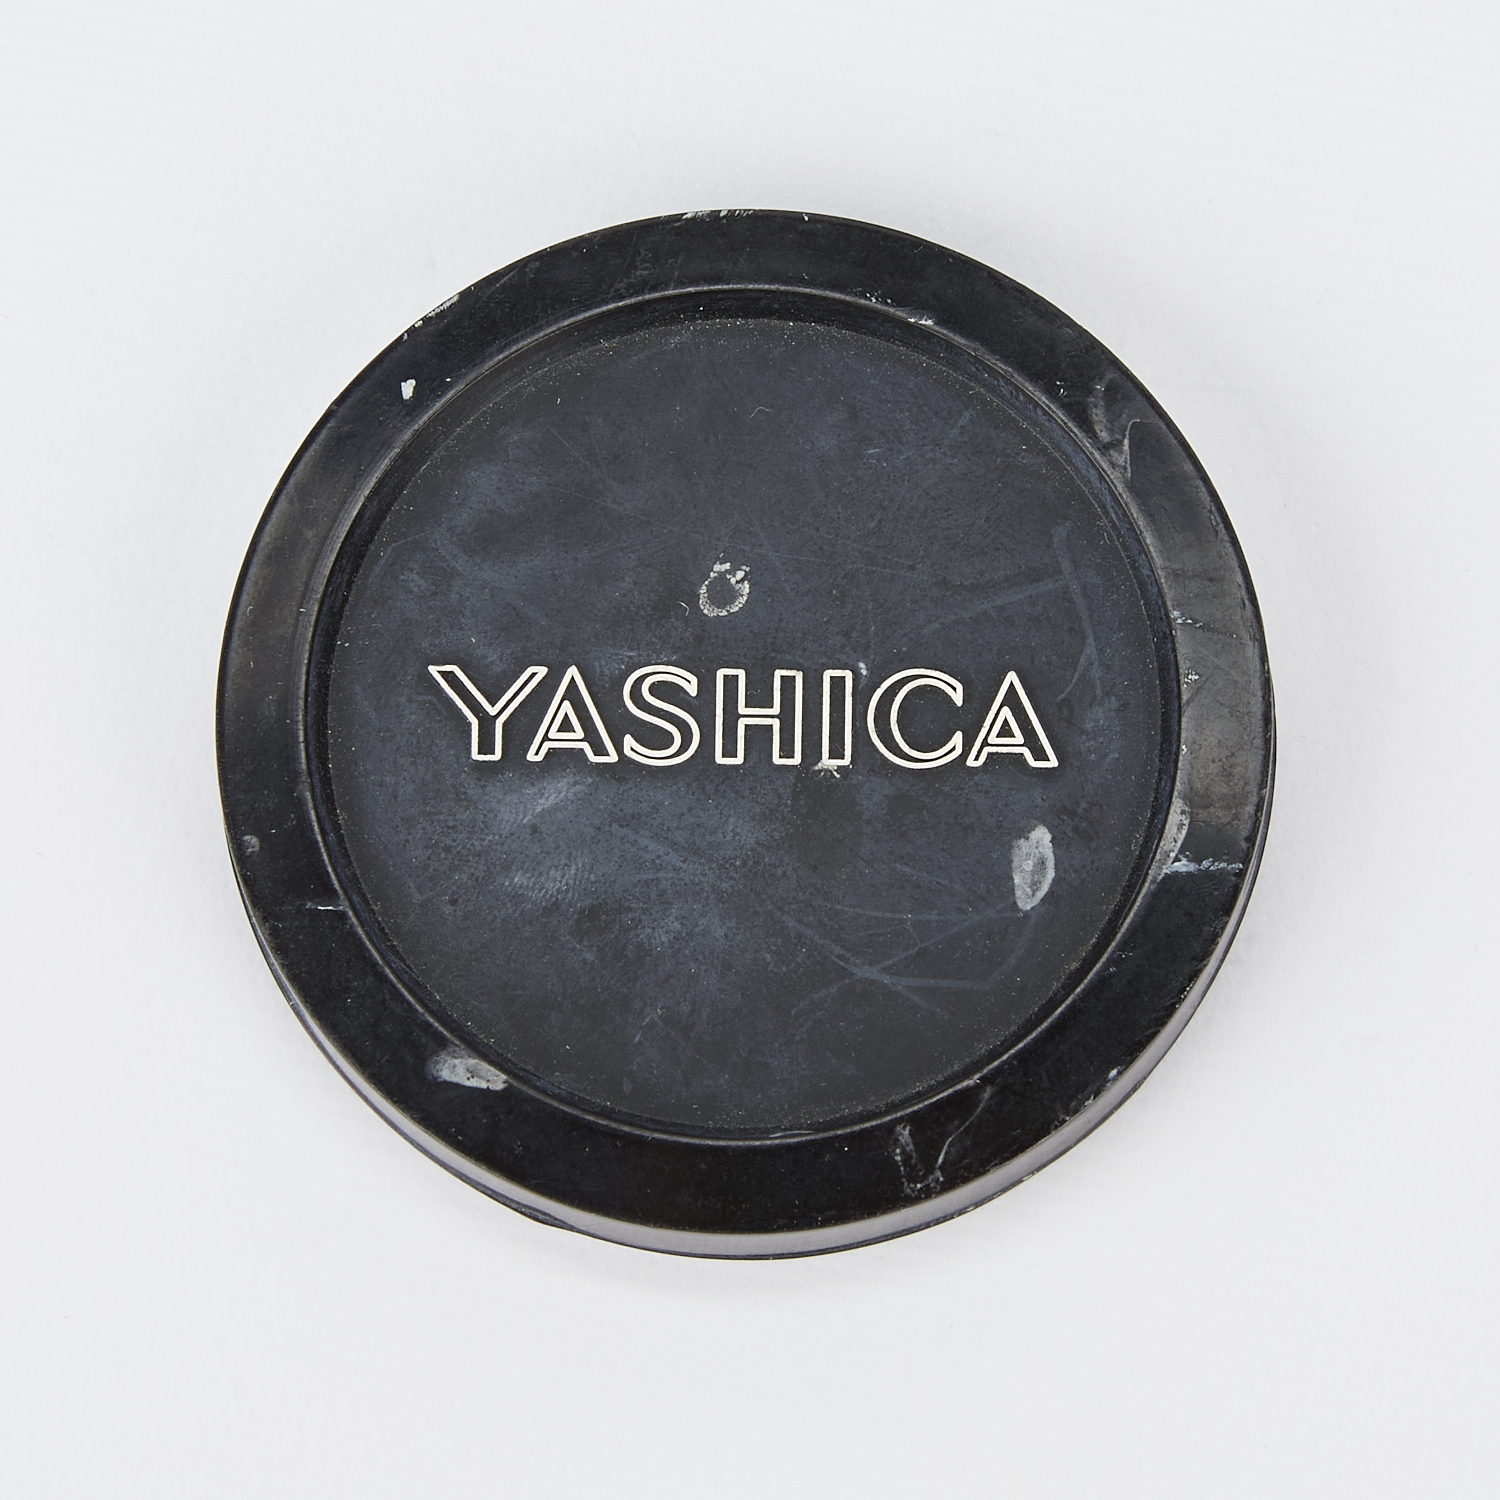 2 Vintage Yashica Japanese Cameras - Image 21 of 22